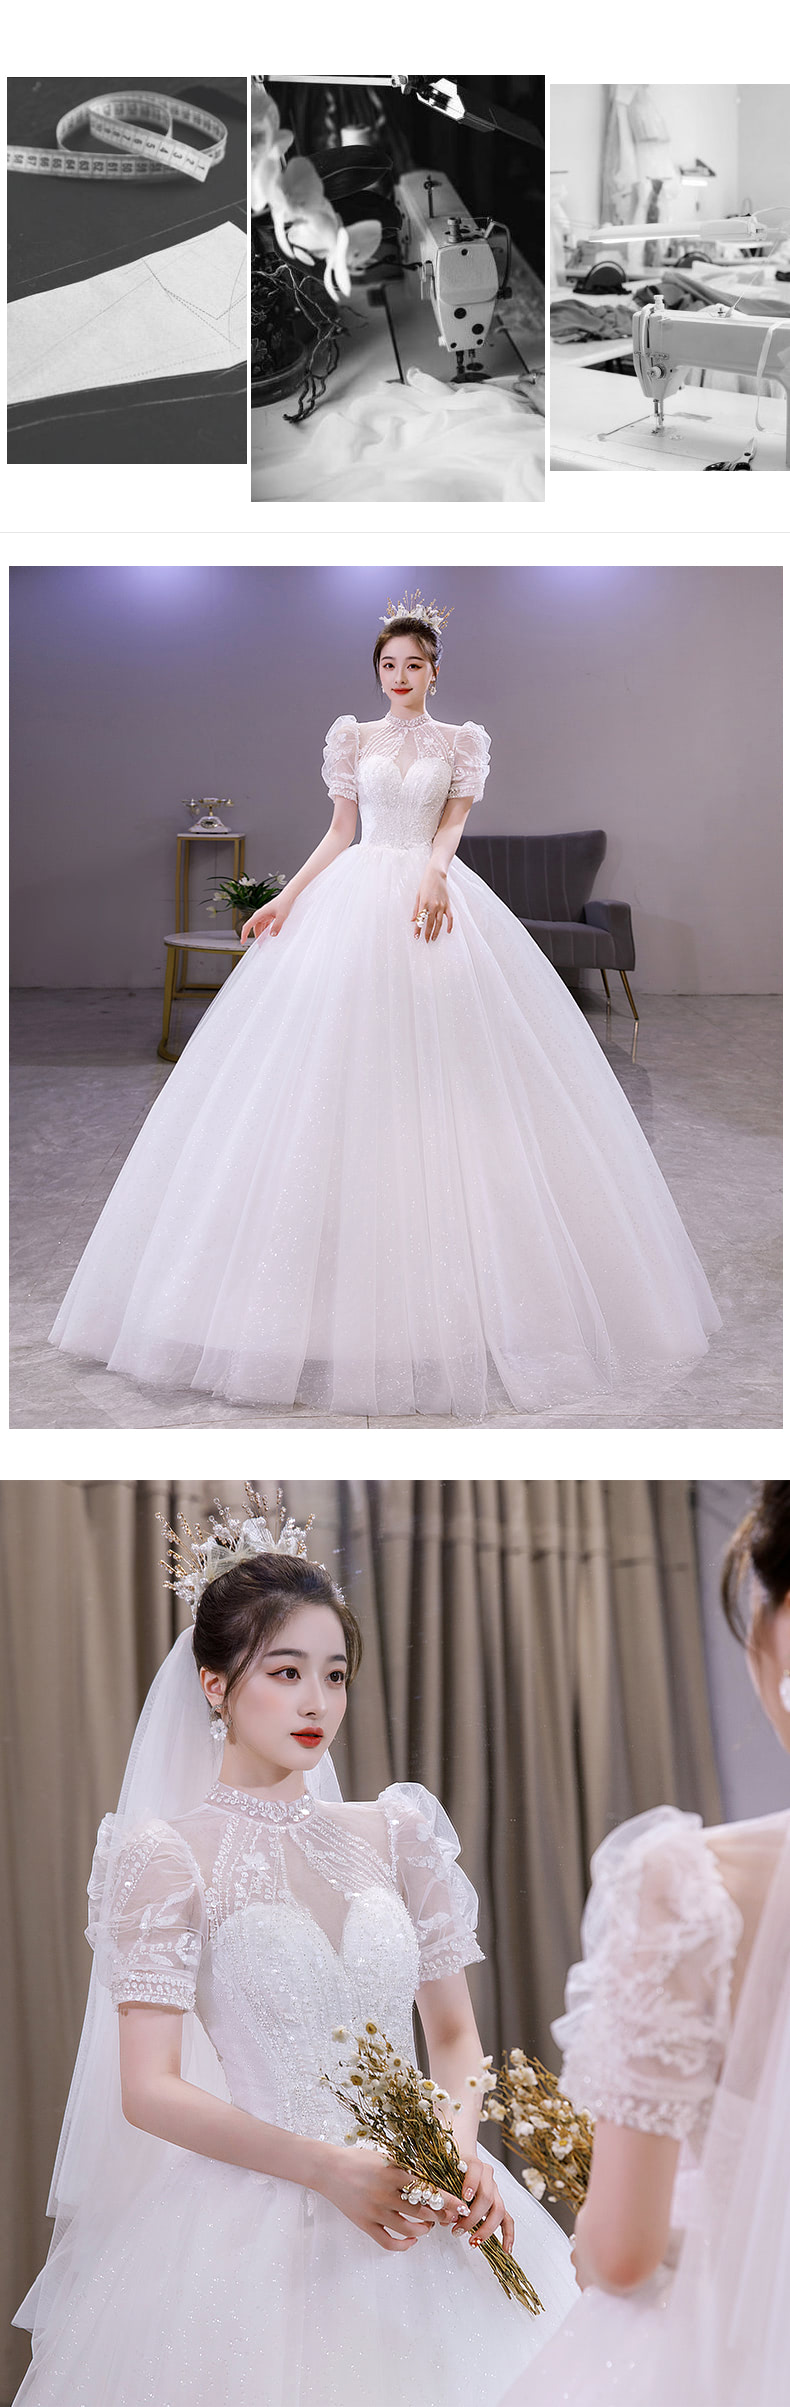 Simple-Romantic-Puff-Sleeve-White-Tulle-Wedding-Bridal-Long-Dress10.jpg